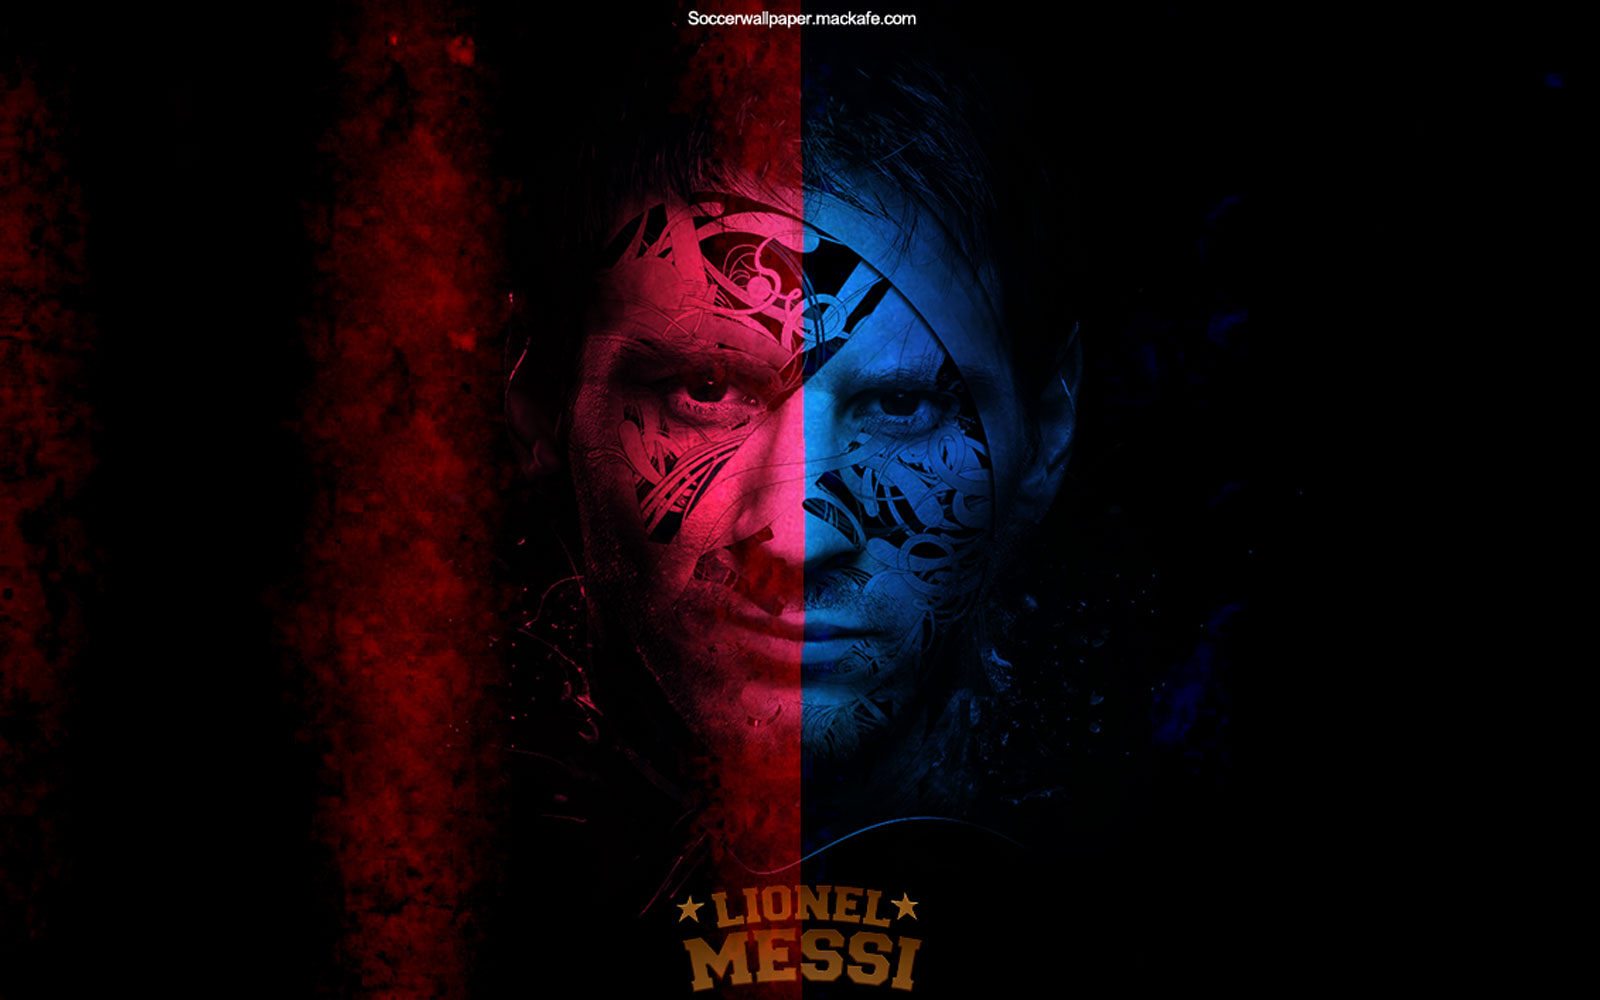 Lionel Messi 2013 Wallpaper 2013